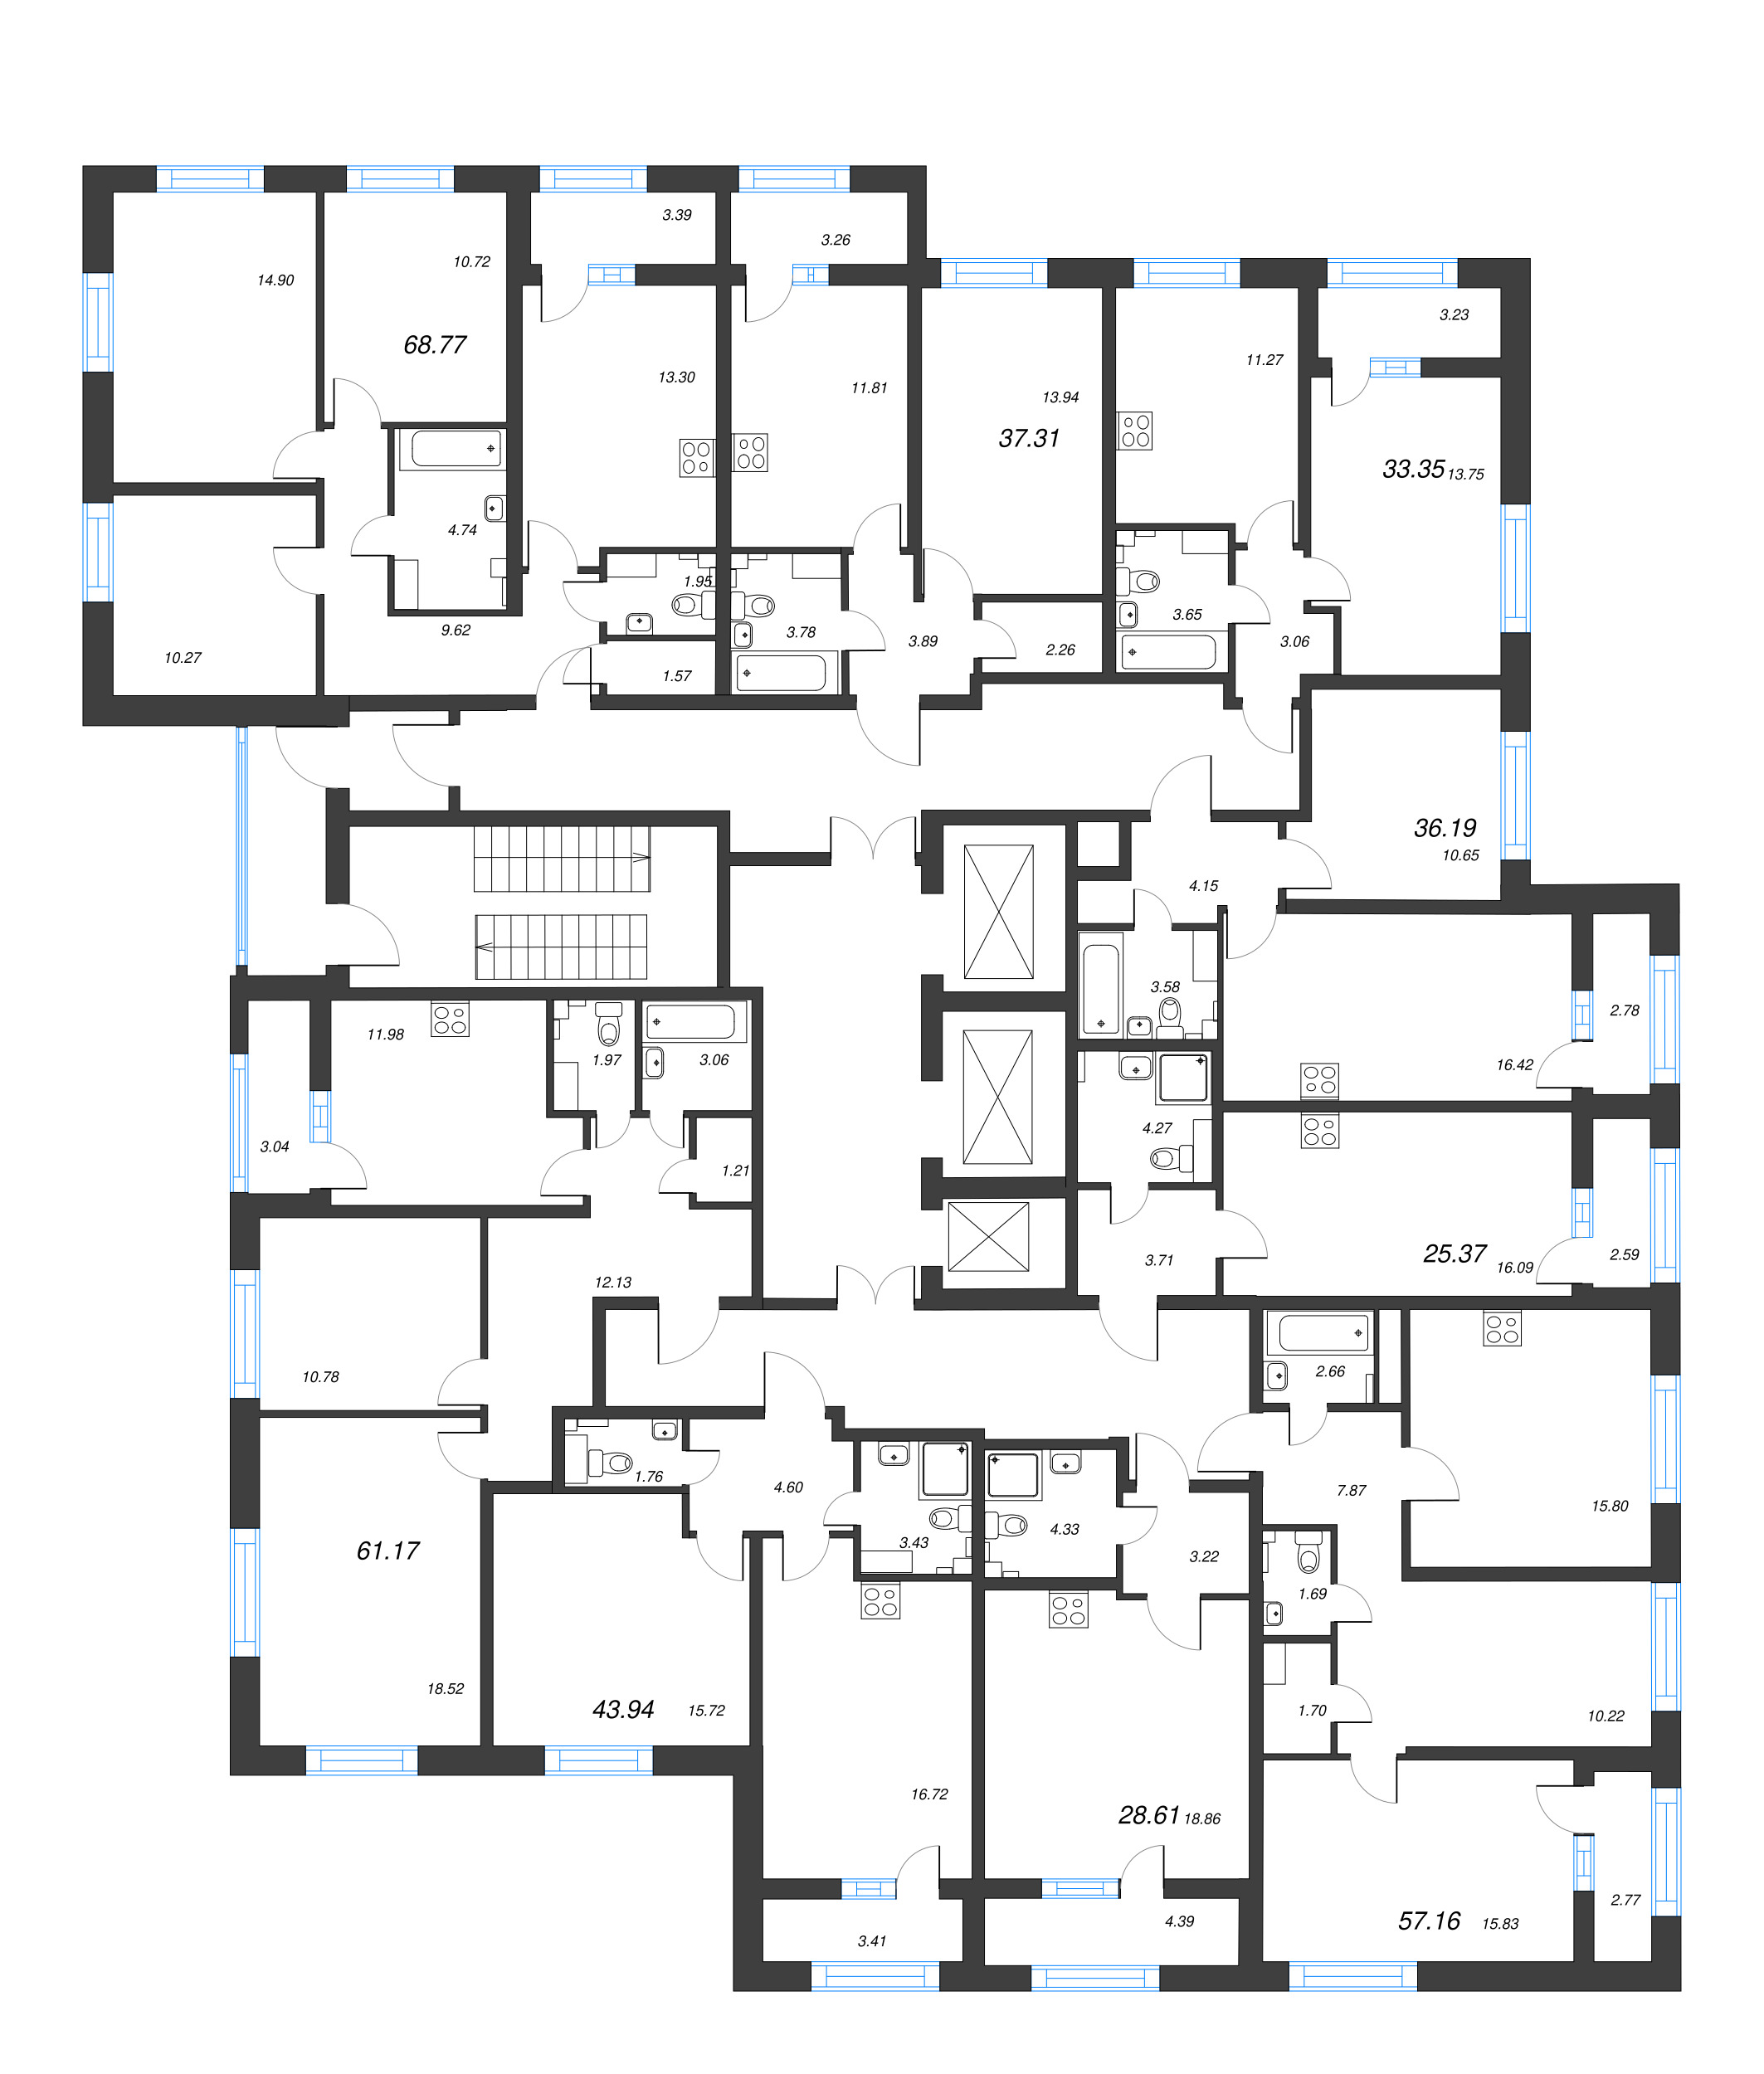 2-комнатная (Евро) квартира, 36.19 м² - планировка этажа